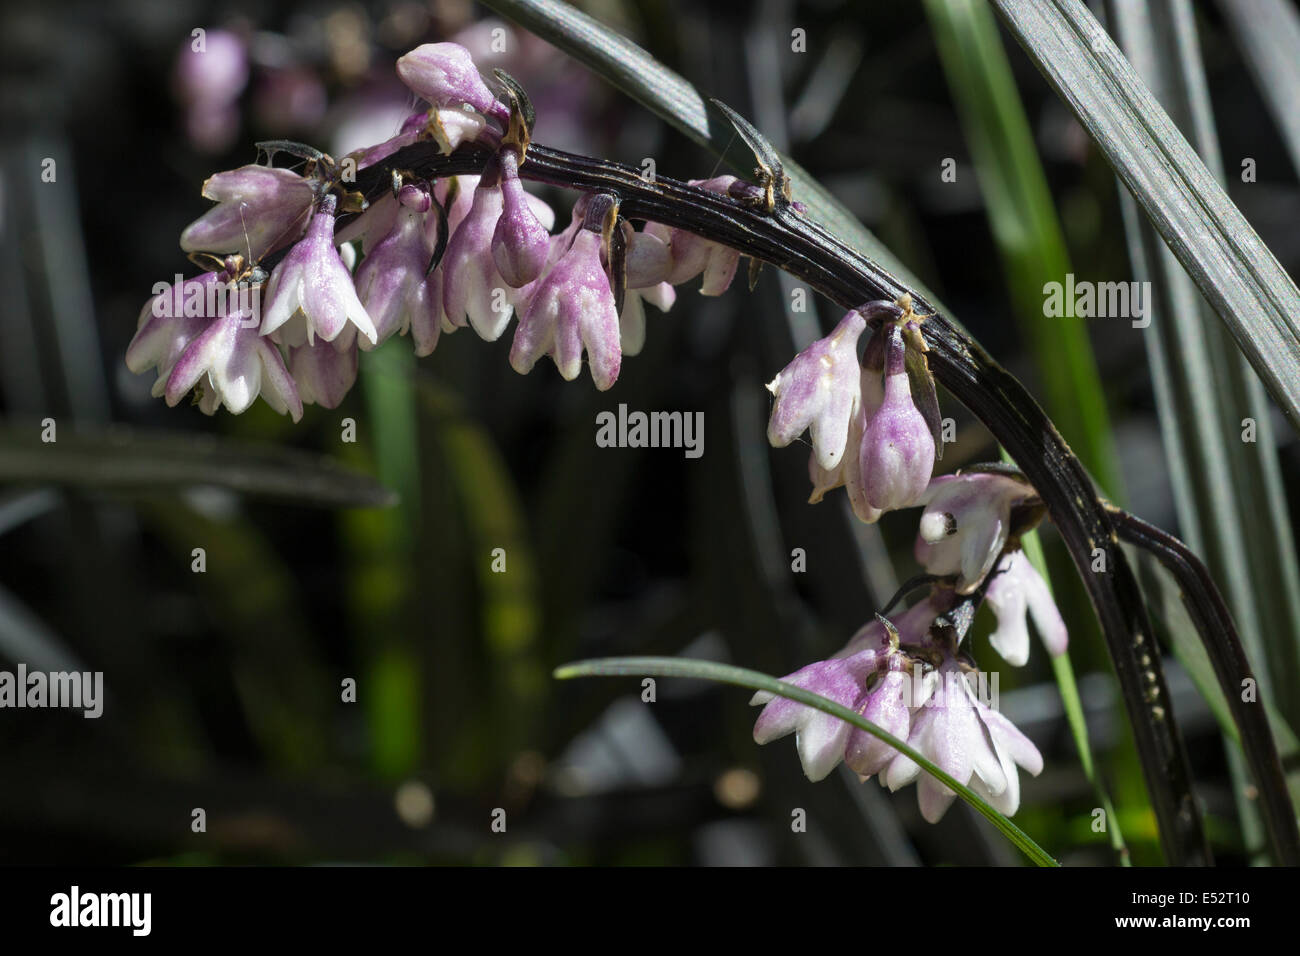 Violet and white flowers of the black mondo grass, Ophiopogon planiscapus 'Nigrescens' Stock Photo